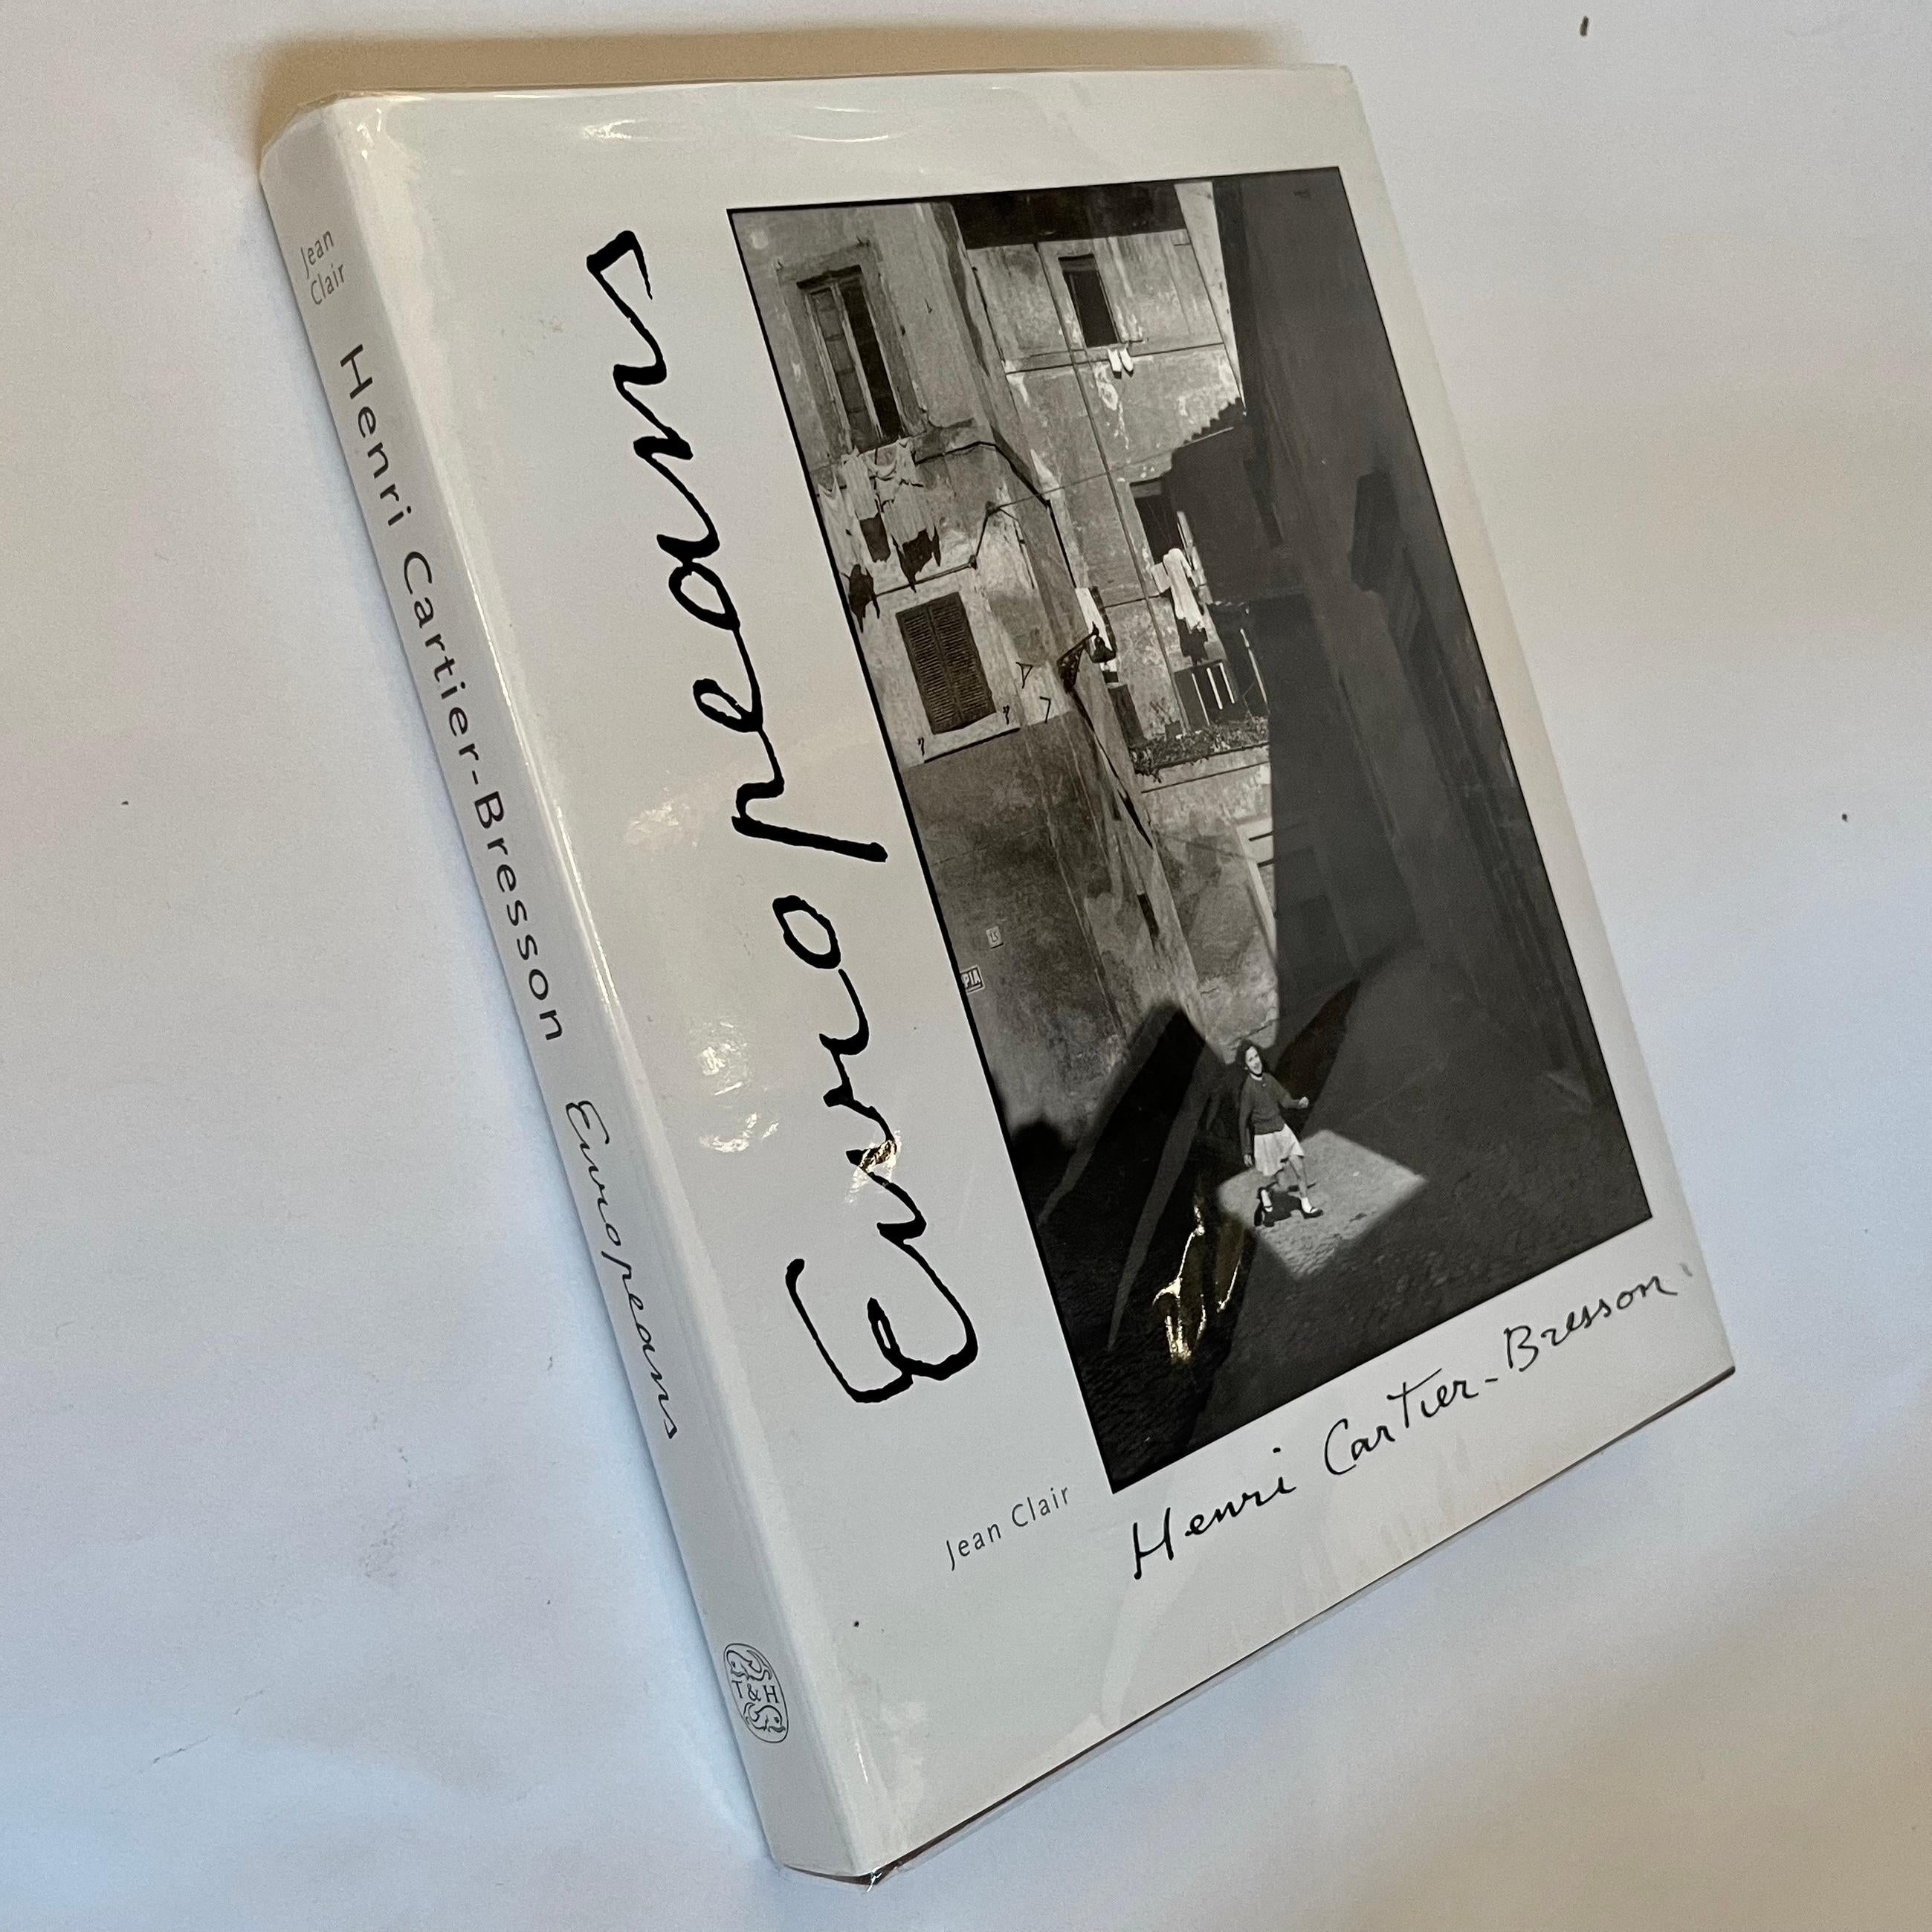 Henri Cartier-Bresson: The Europeans - Jean Clair, Thames & Hudson, London, 1998 7